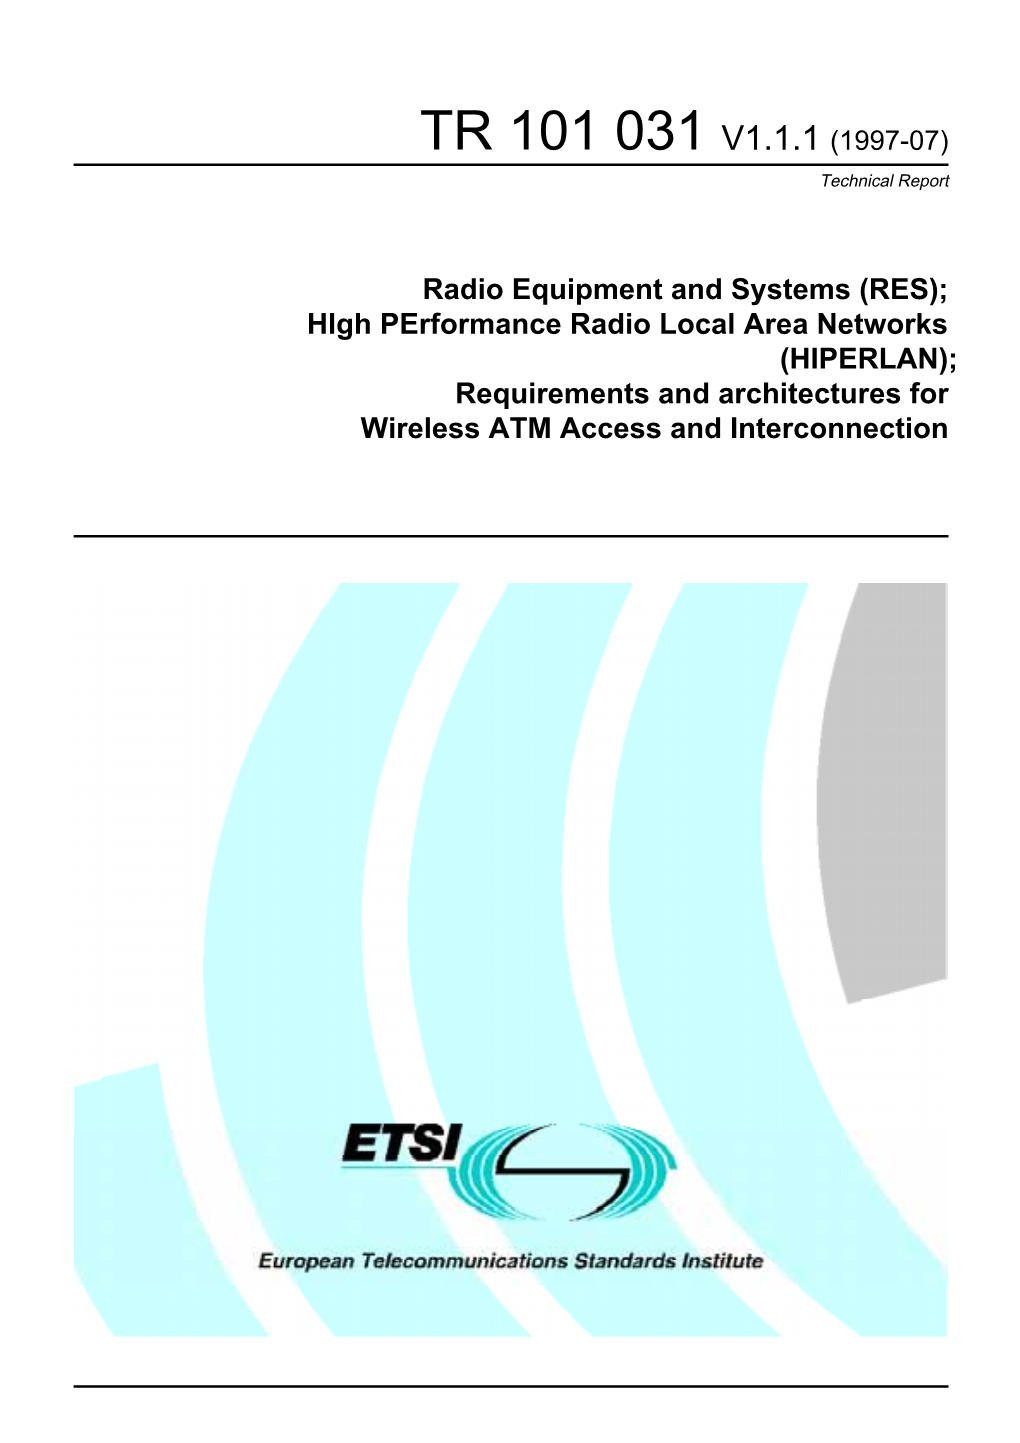 TR 101 031 V1.1.1 (1997-07) Technical Report